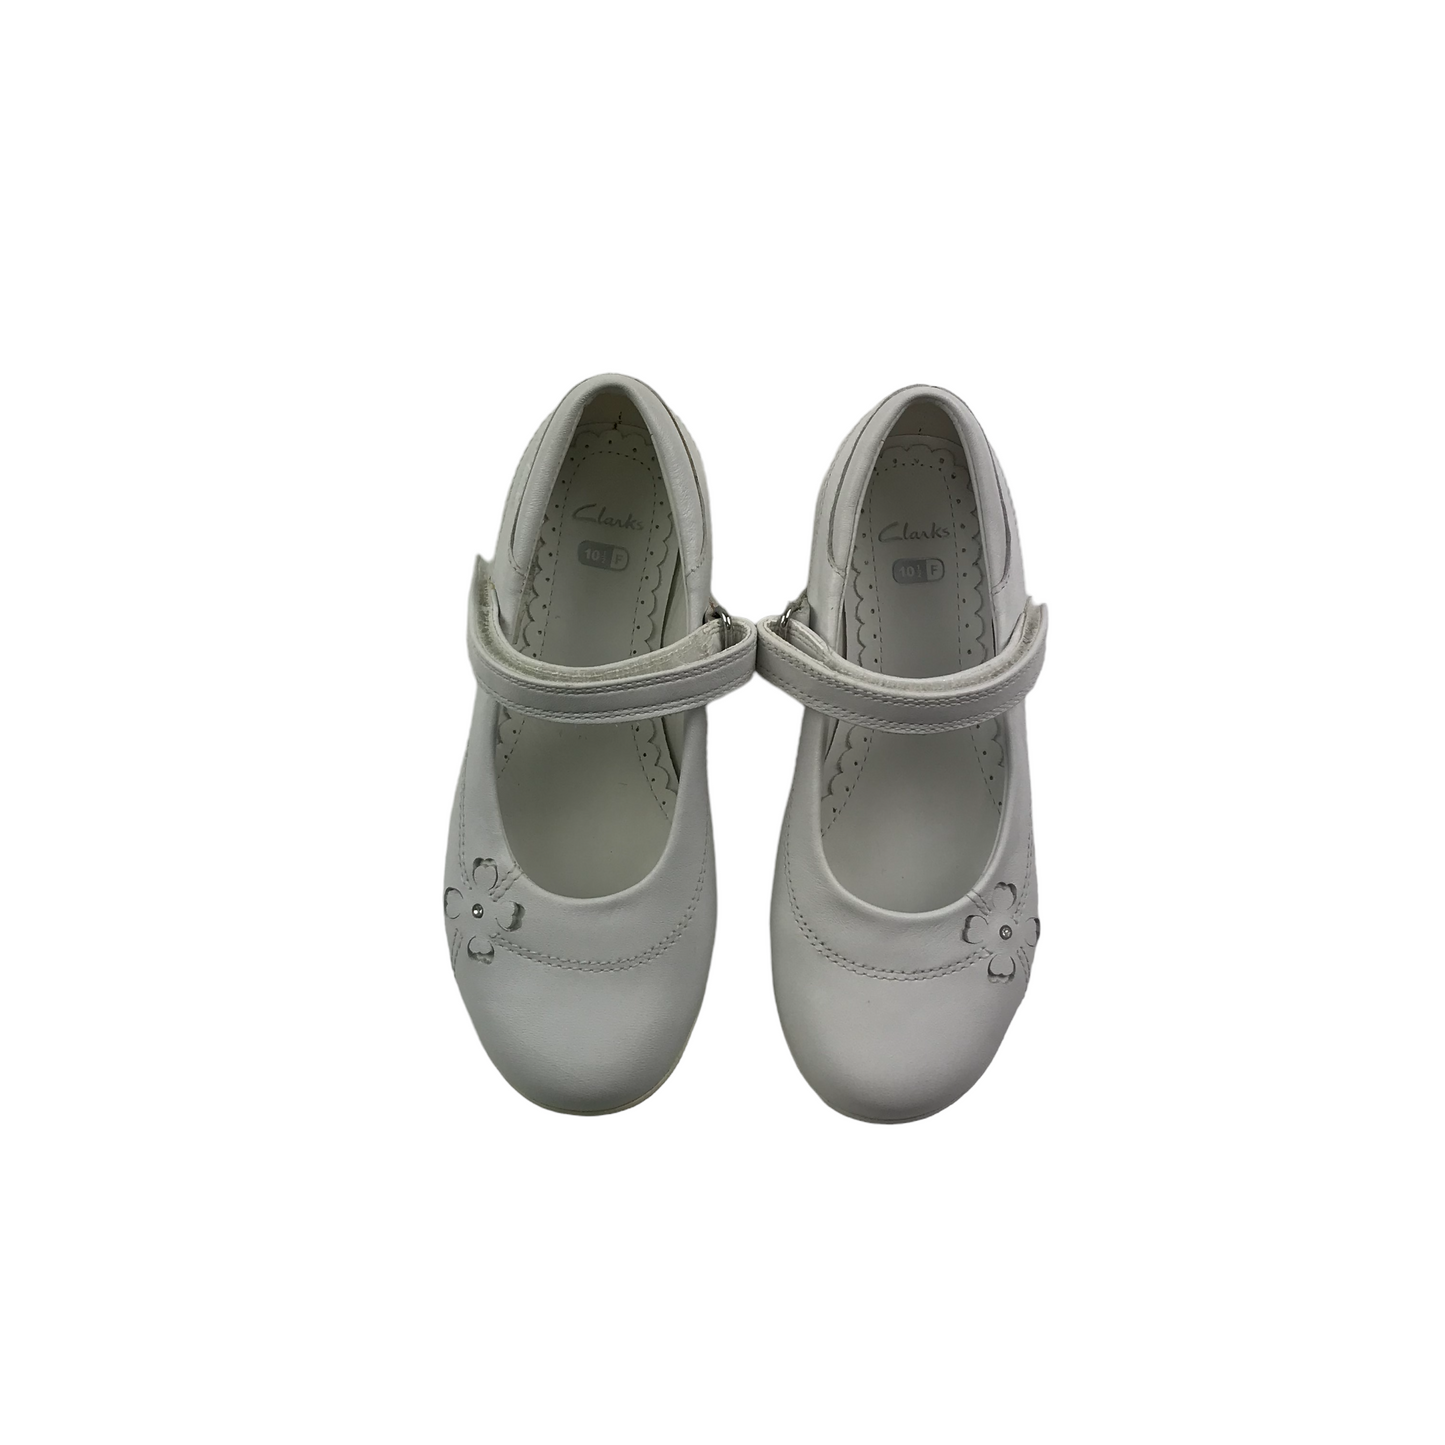 Clarks White Leather Pumps Shoe Size 10.5F junior